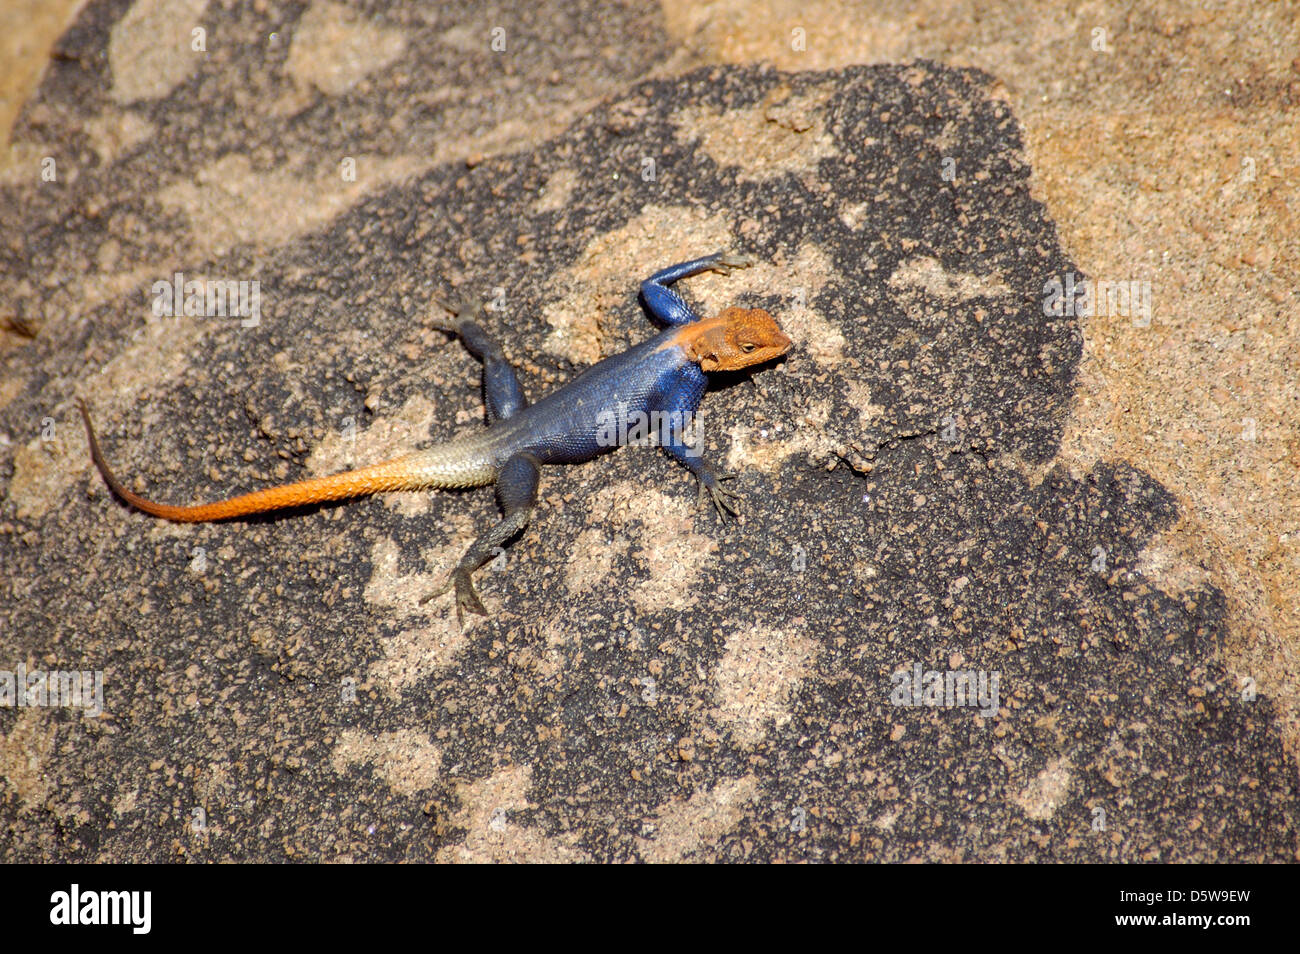 Red-headed agama or rainbow lizard male (Agama agama : Agamidae), Namibia Stock Photo